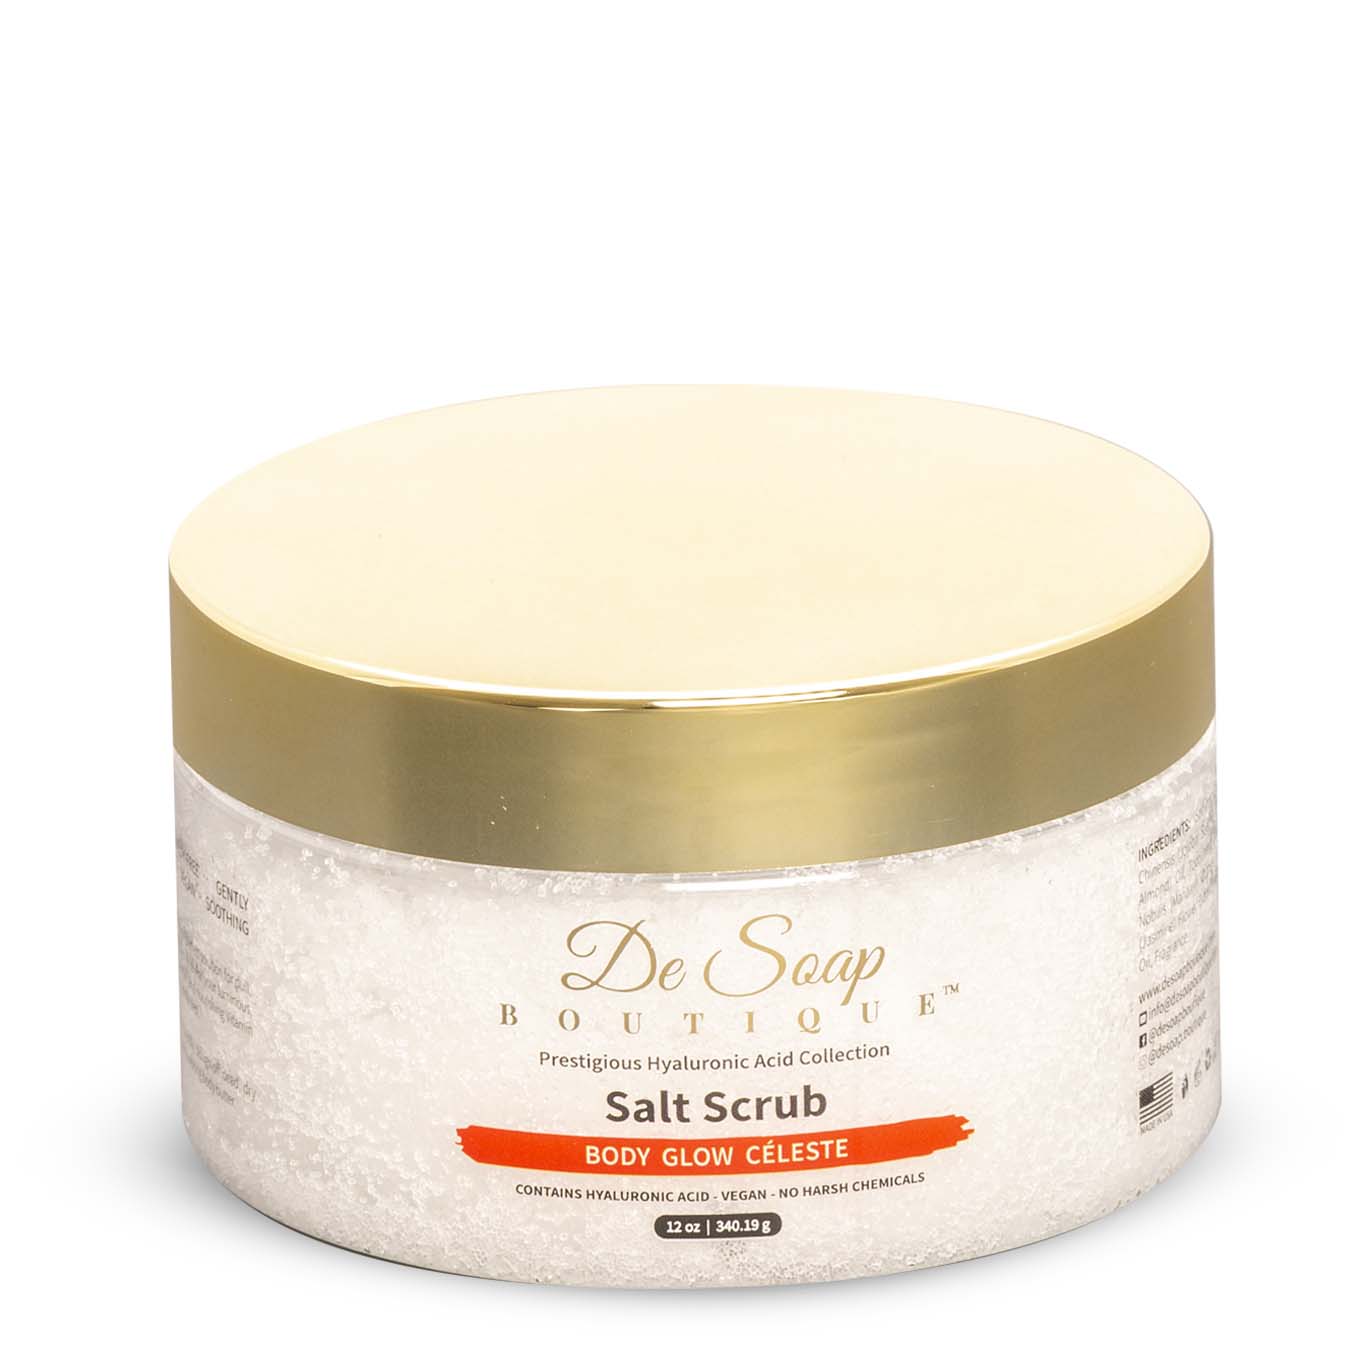 De Soap Boutique Body Glow Salt Scrub | Céleste 12 oz